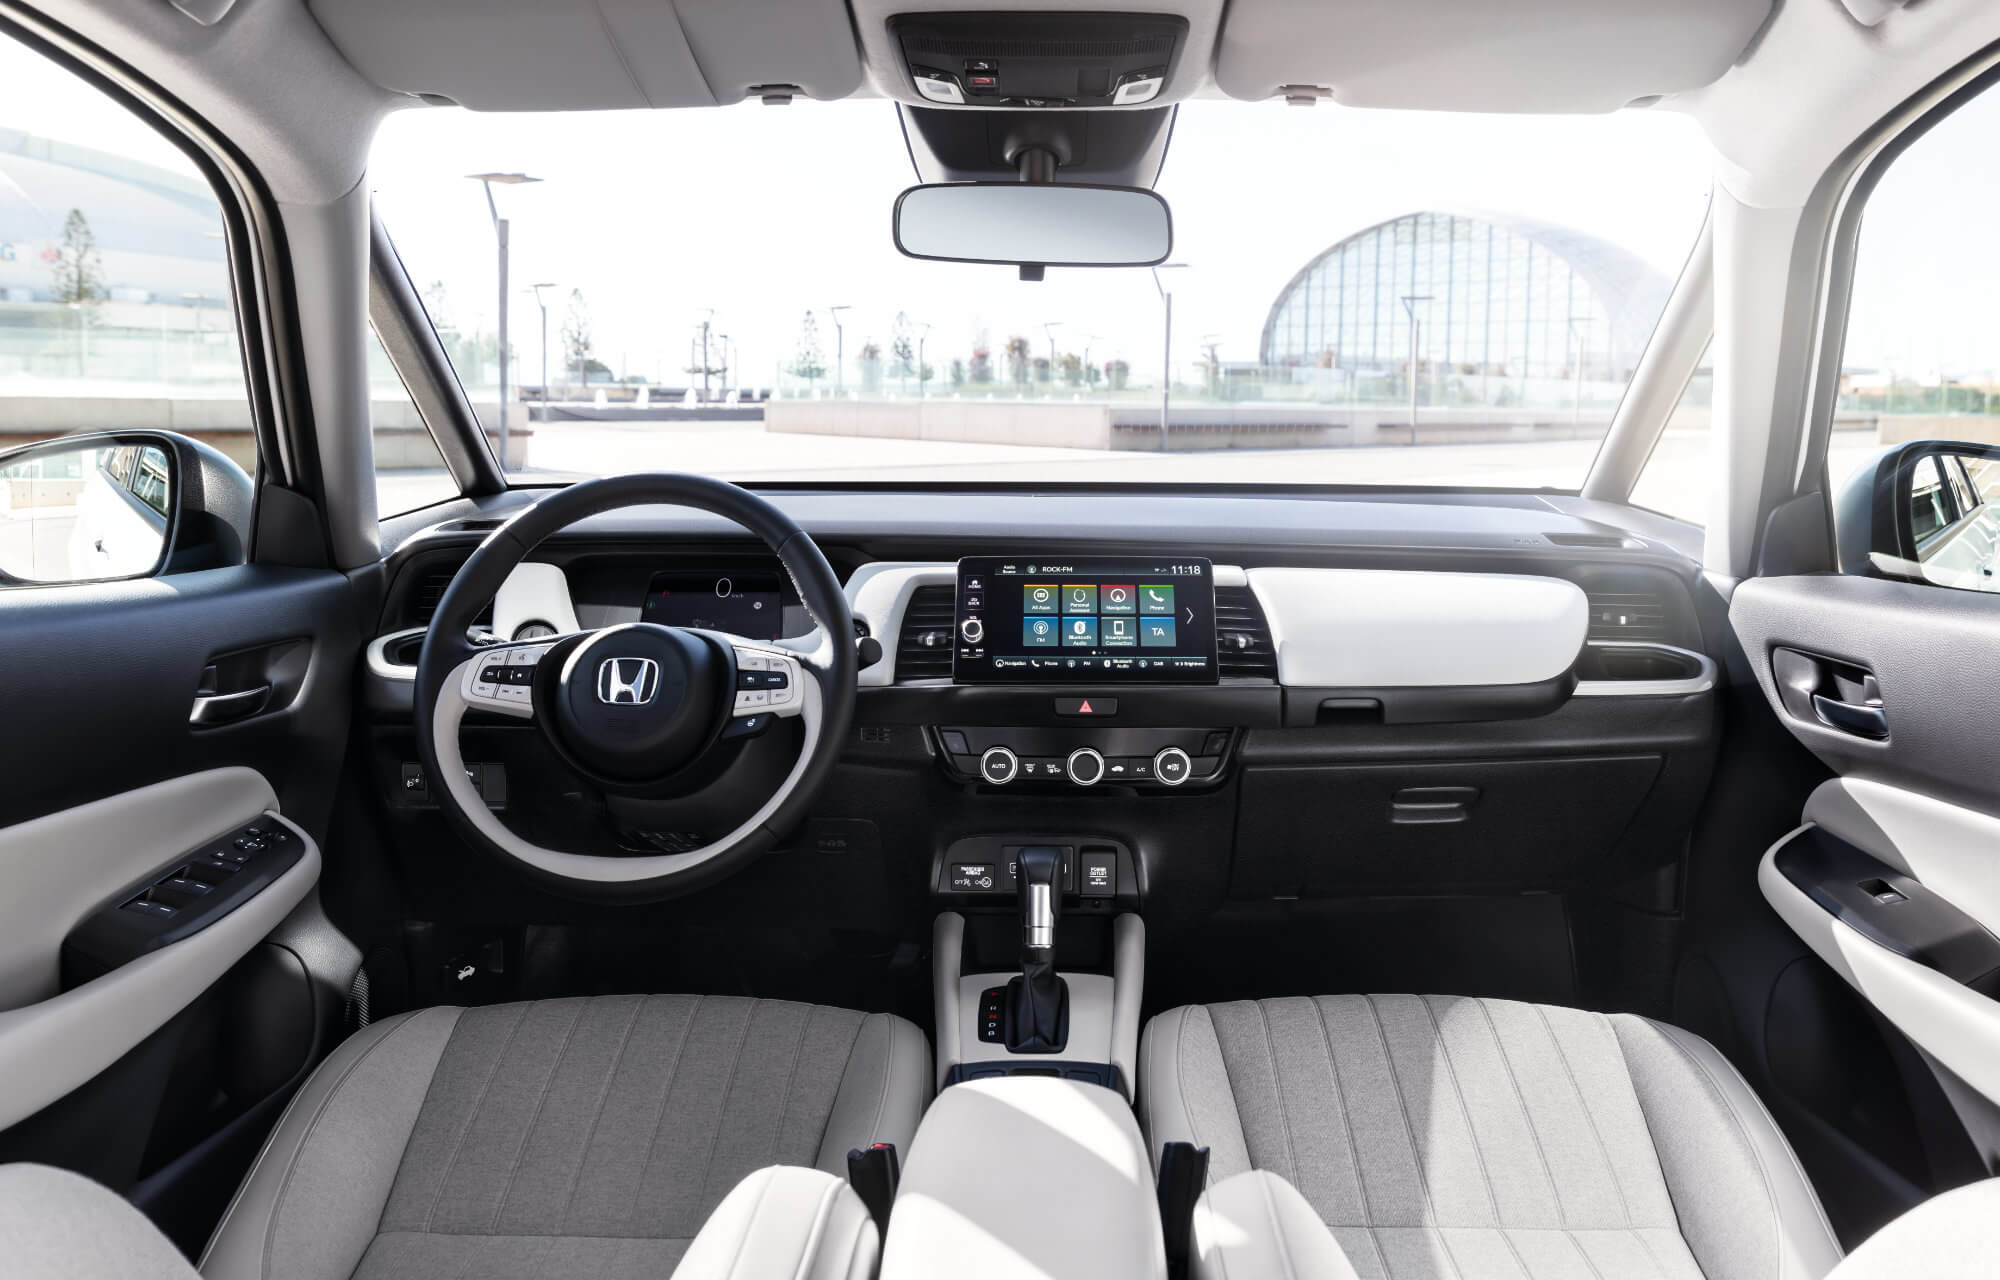 All-New Jazz Hybrid wins Reddot Car Design Award 2021